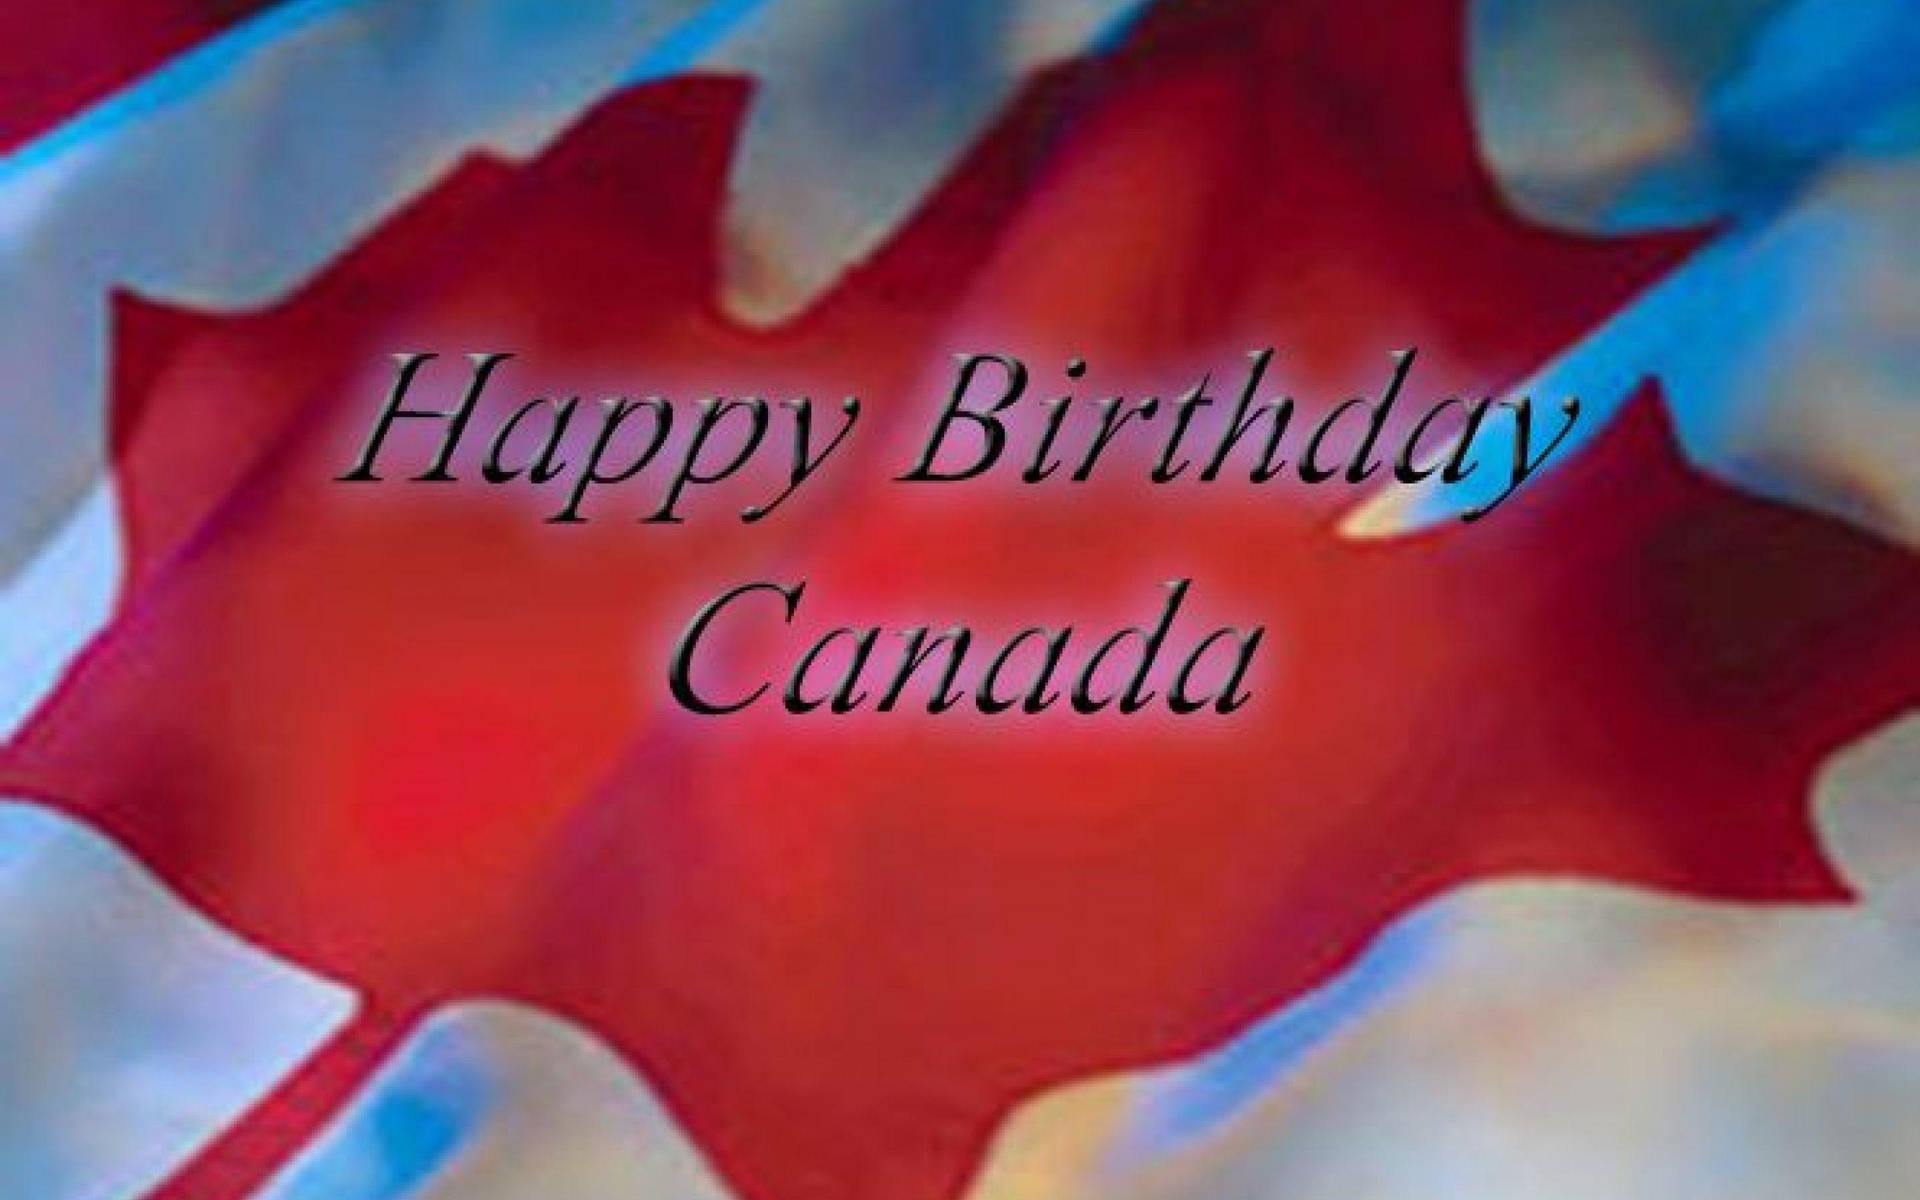 Canada Birth Day Background